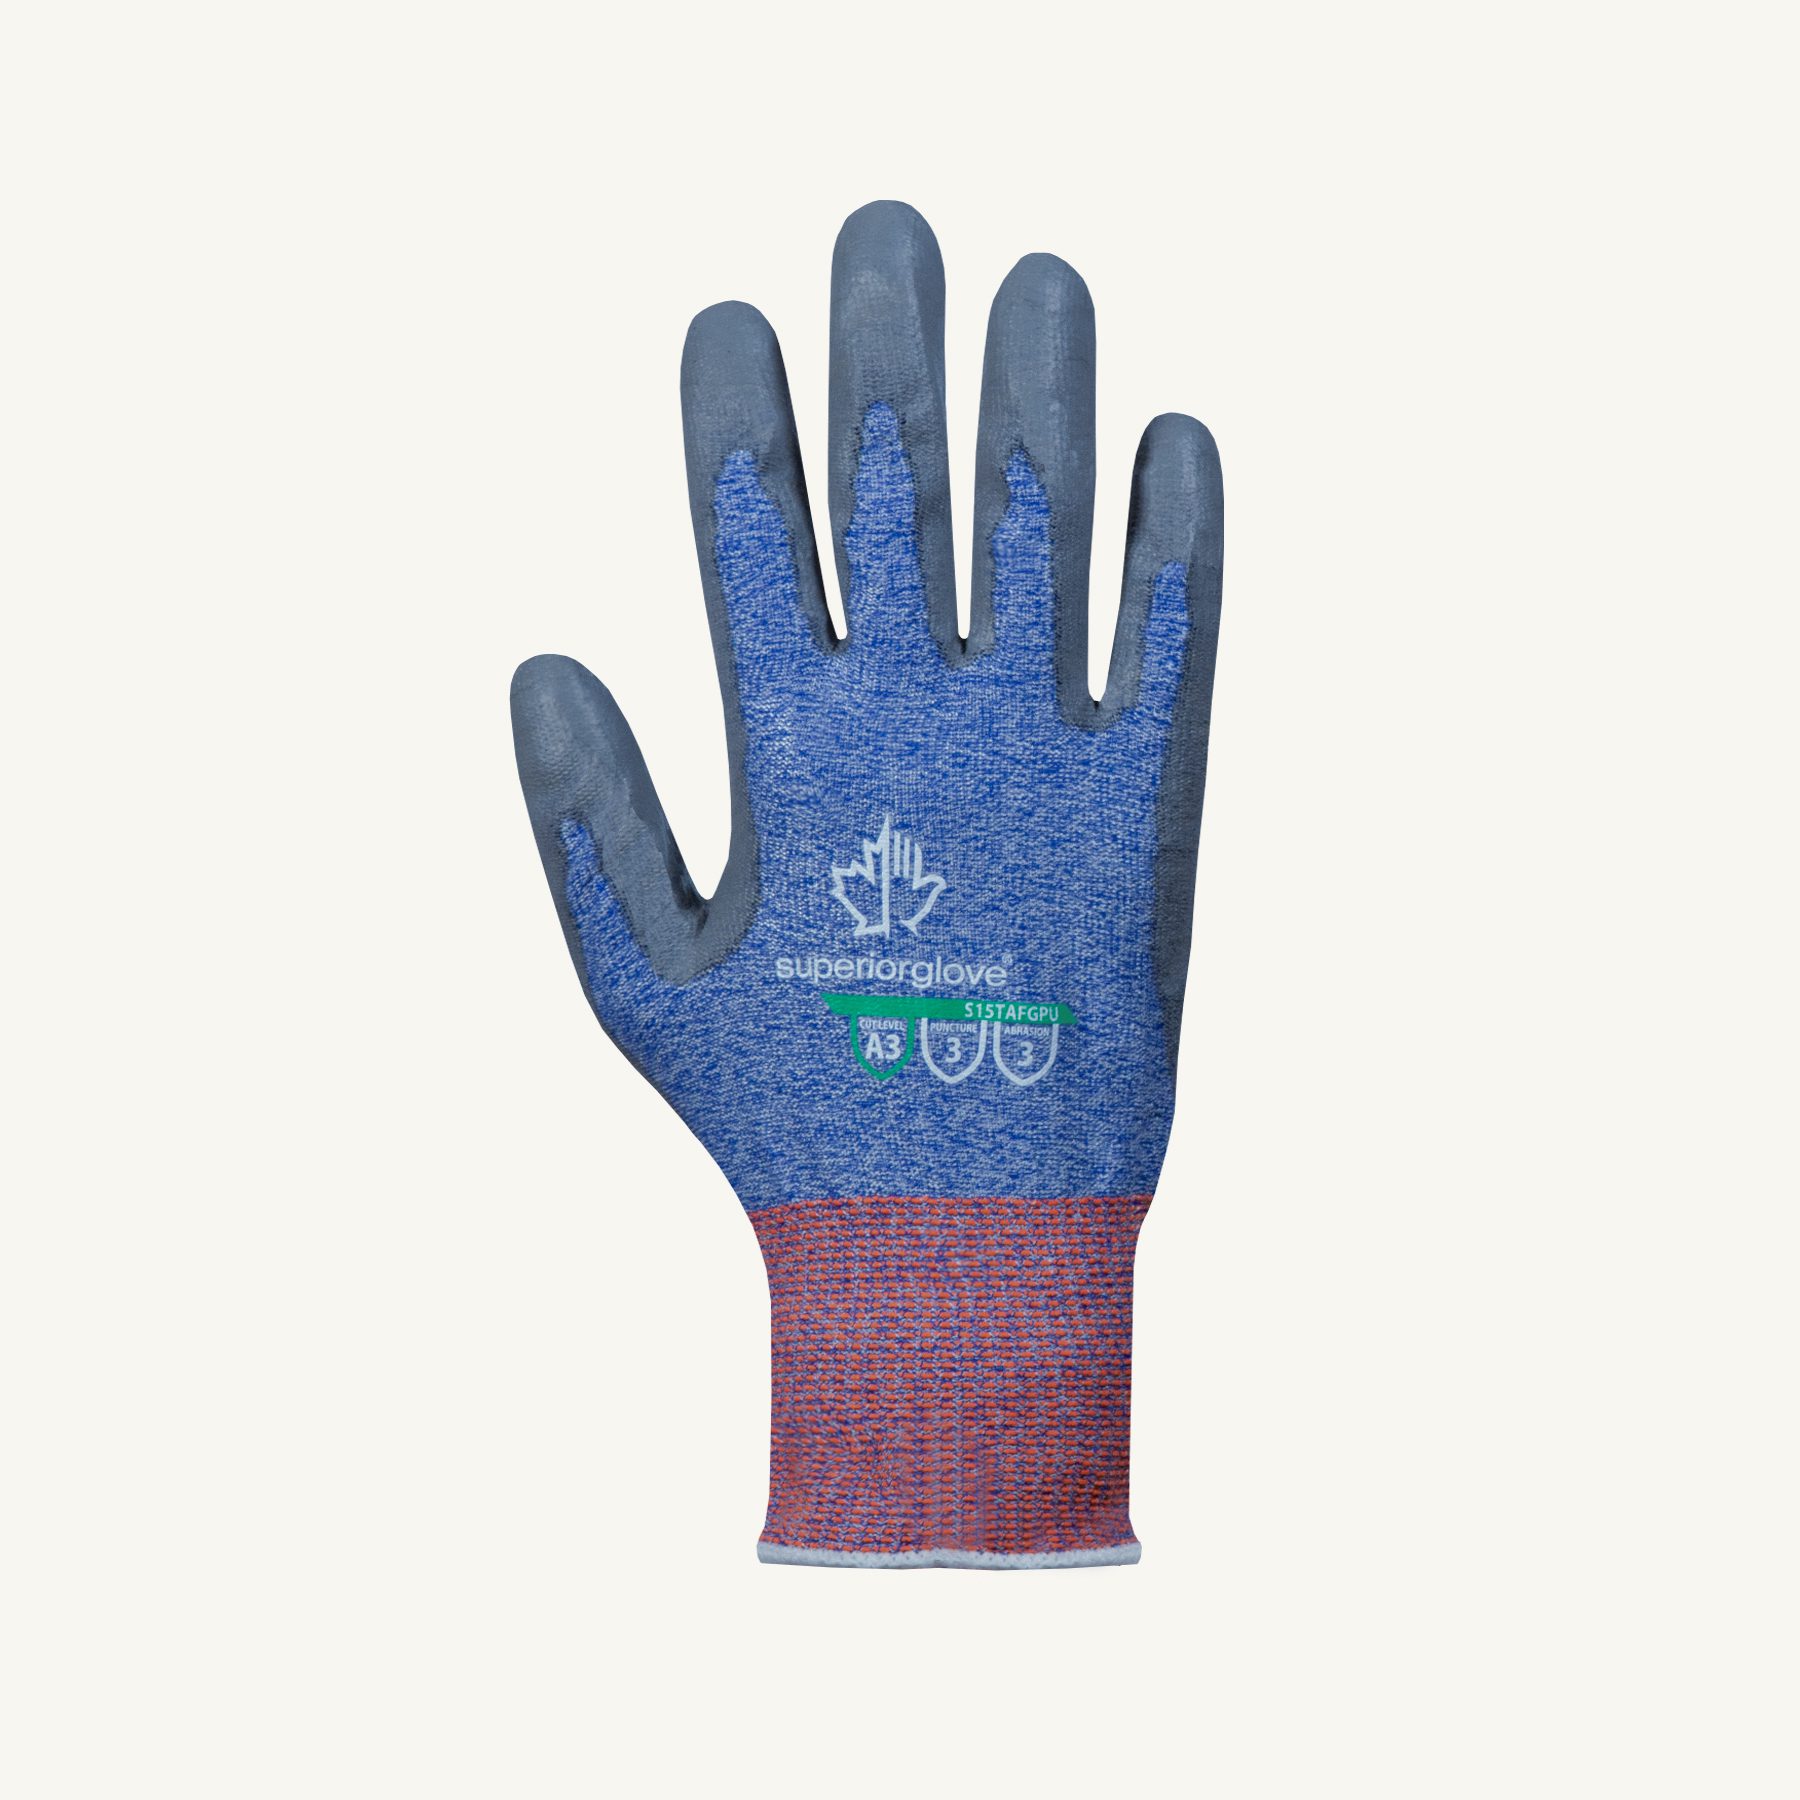 Firm Grip Nitrile Work Gloves 15 Pack